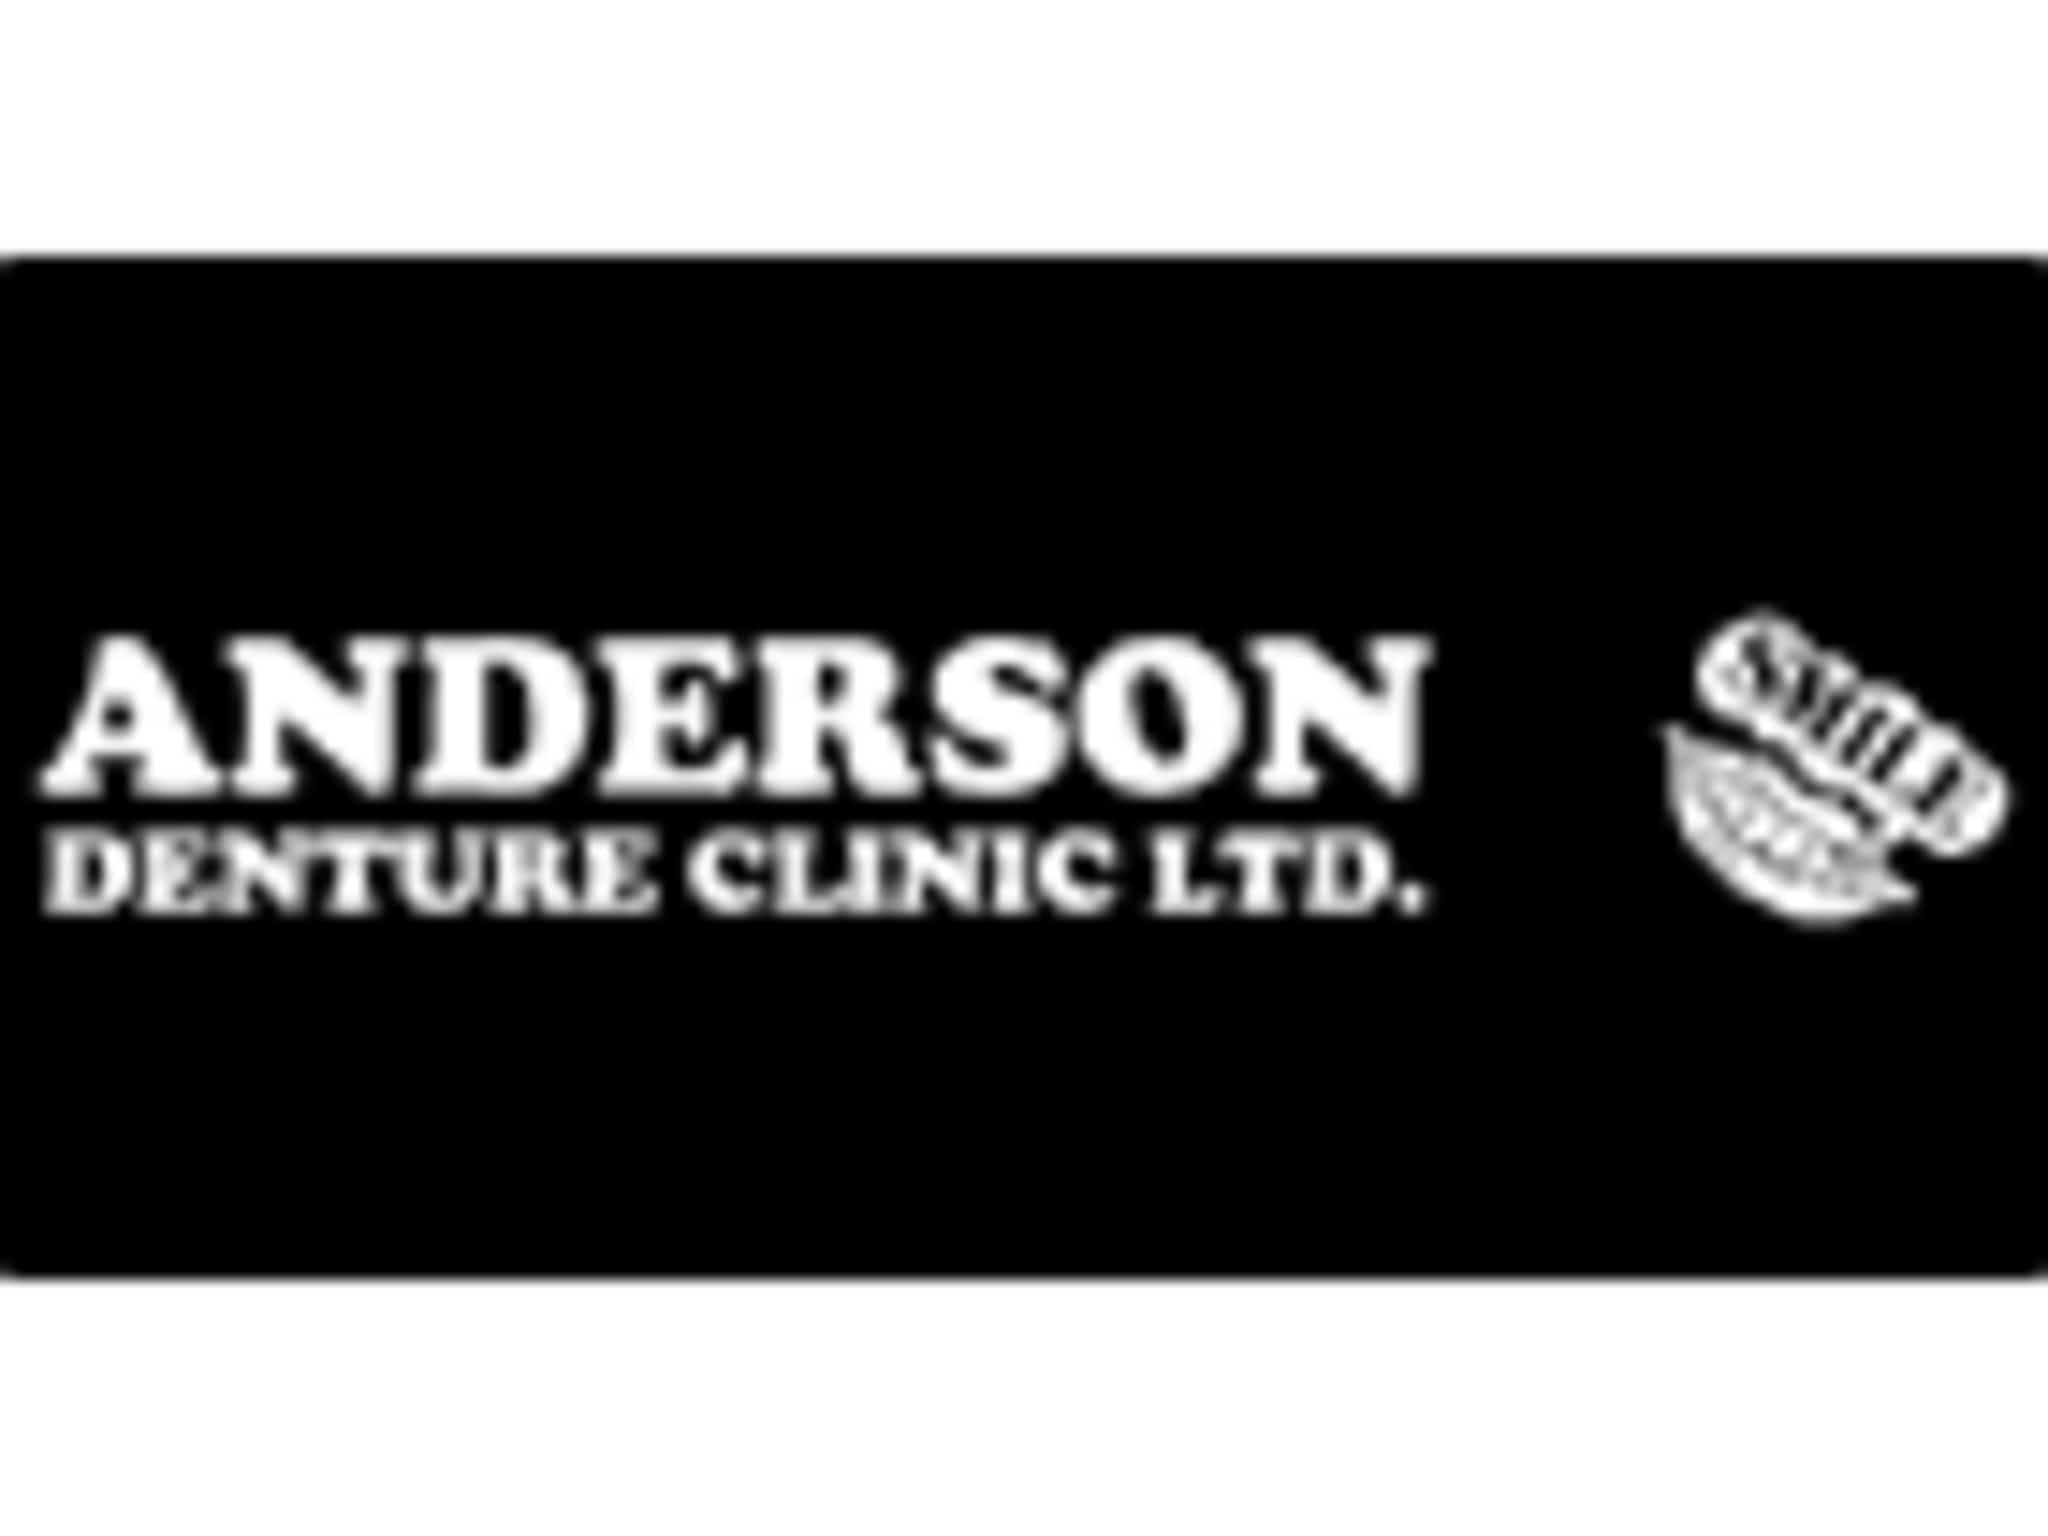 photo Anderson Denture Clinic Ltd